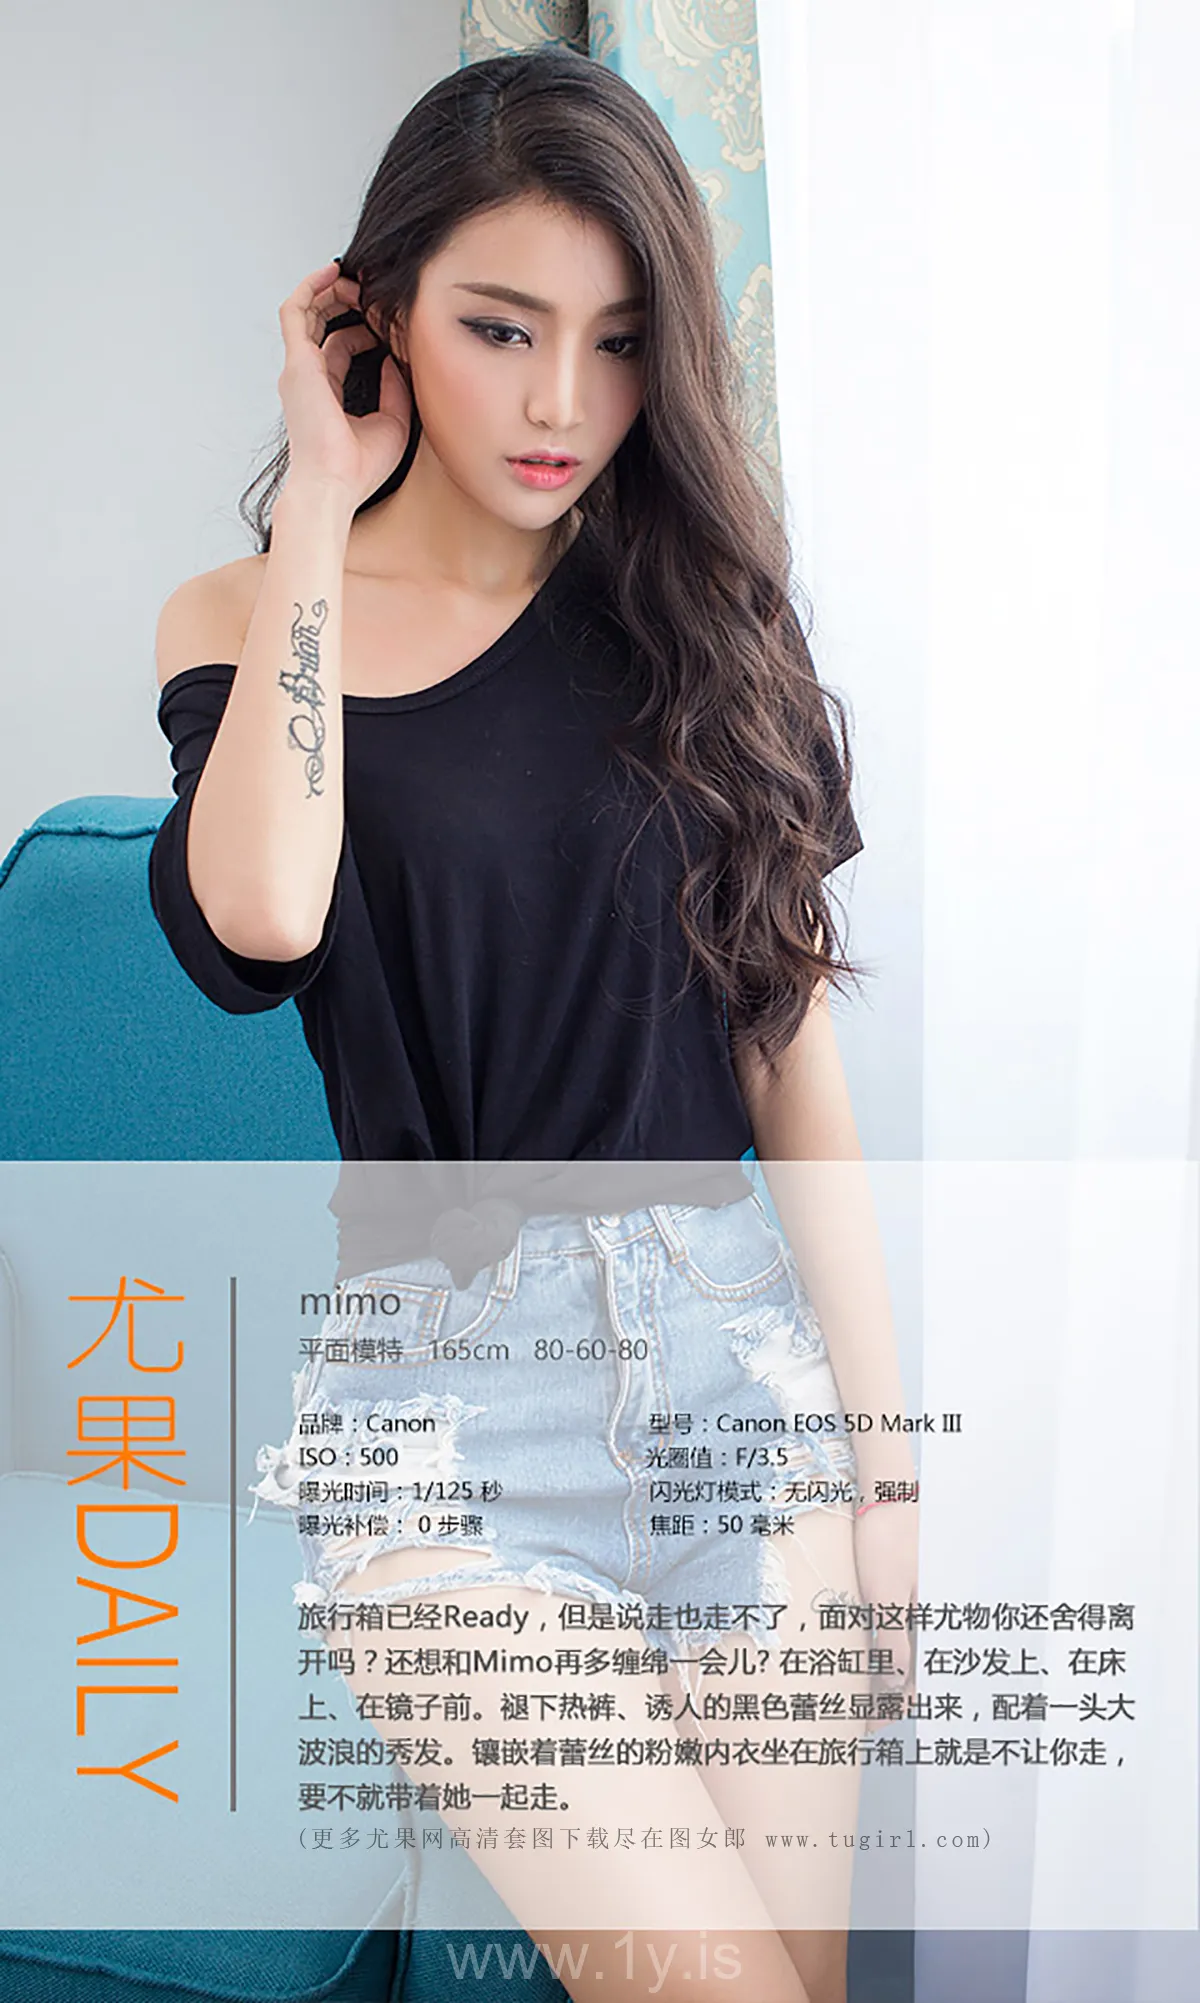 UGIRLS NO.388 Pretty & Appealing Chinese Homebody Girl mimo